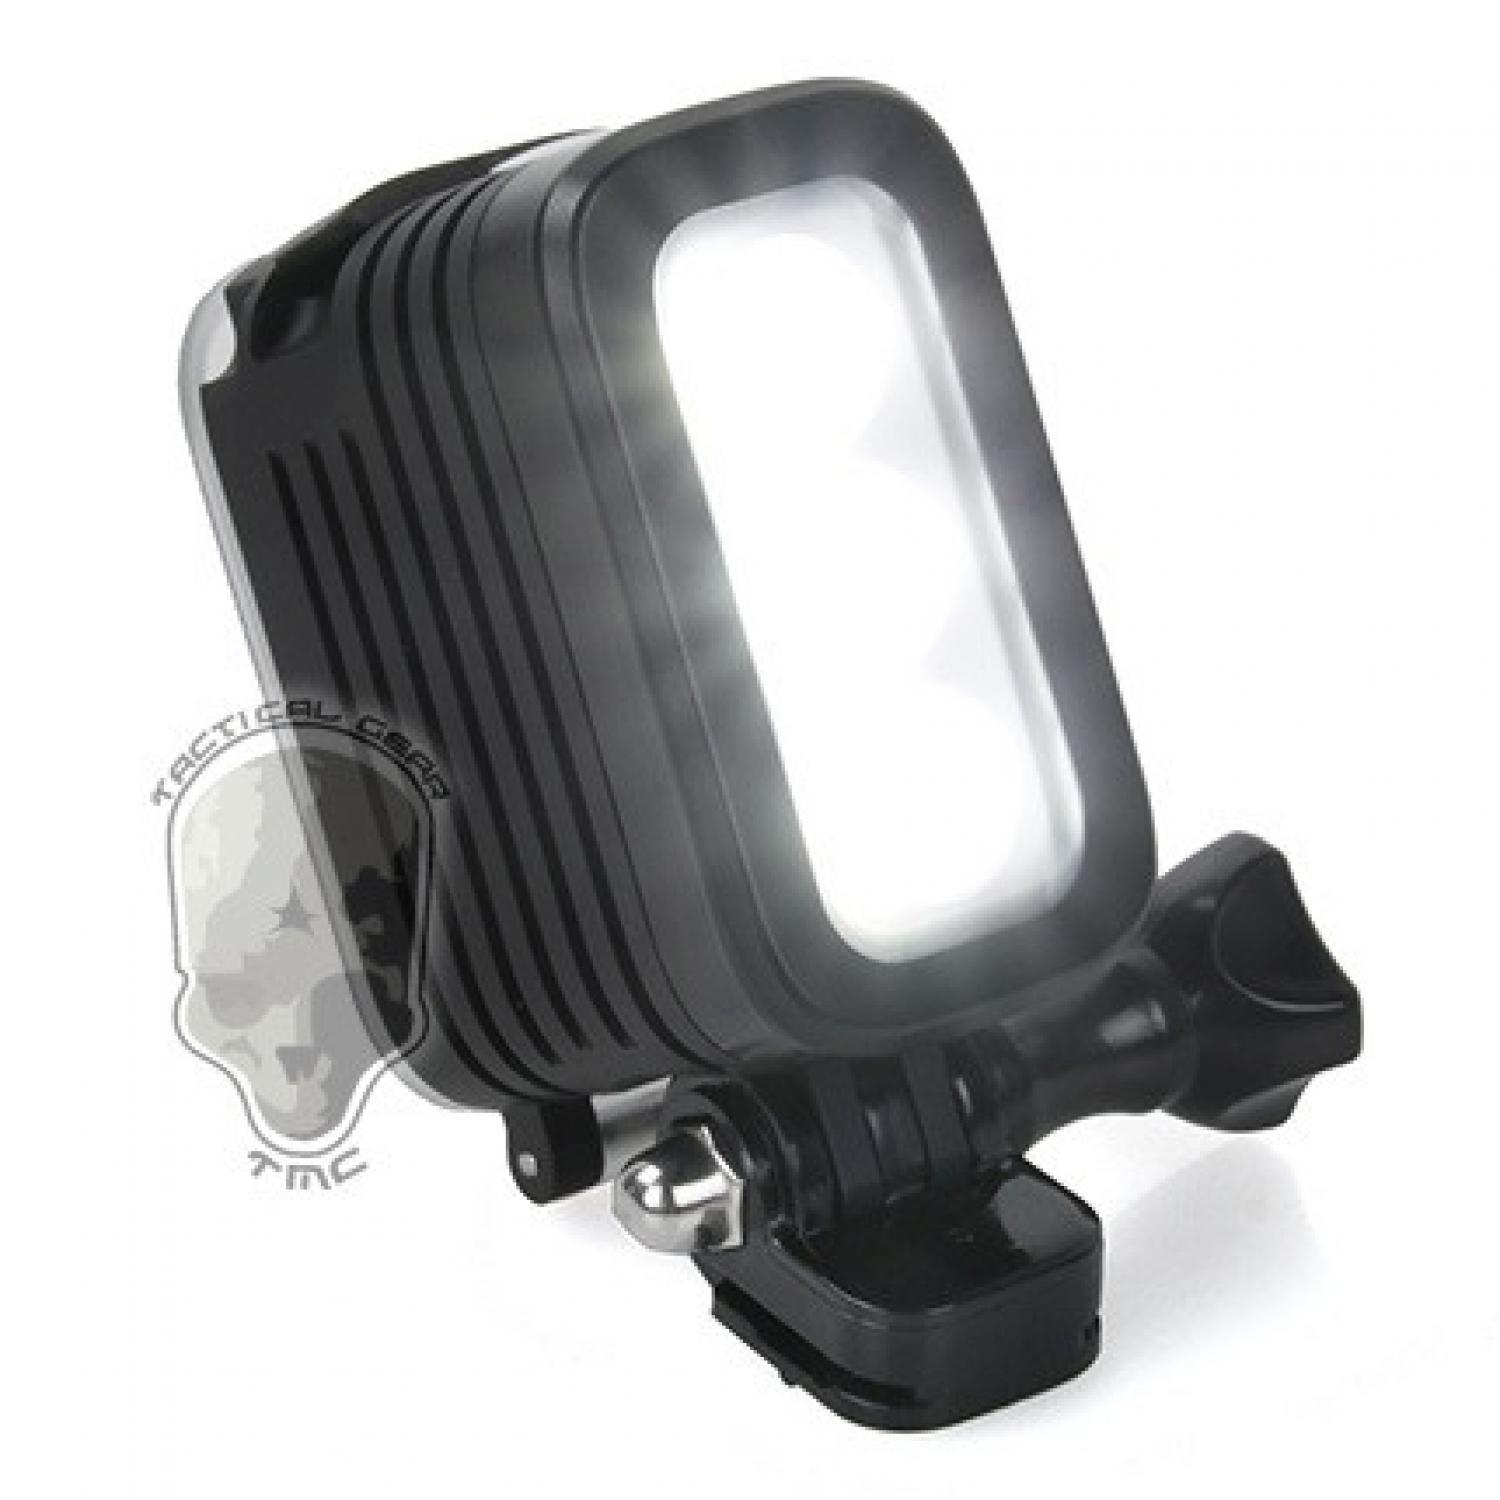 Flash kamera/Flash kamera canon TMC Camera Headlight GoPro 3 Cree LED 280 Lumens - HR325